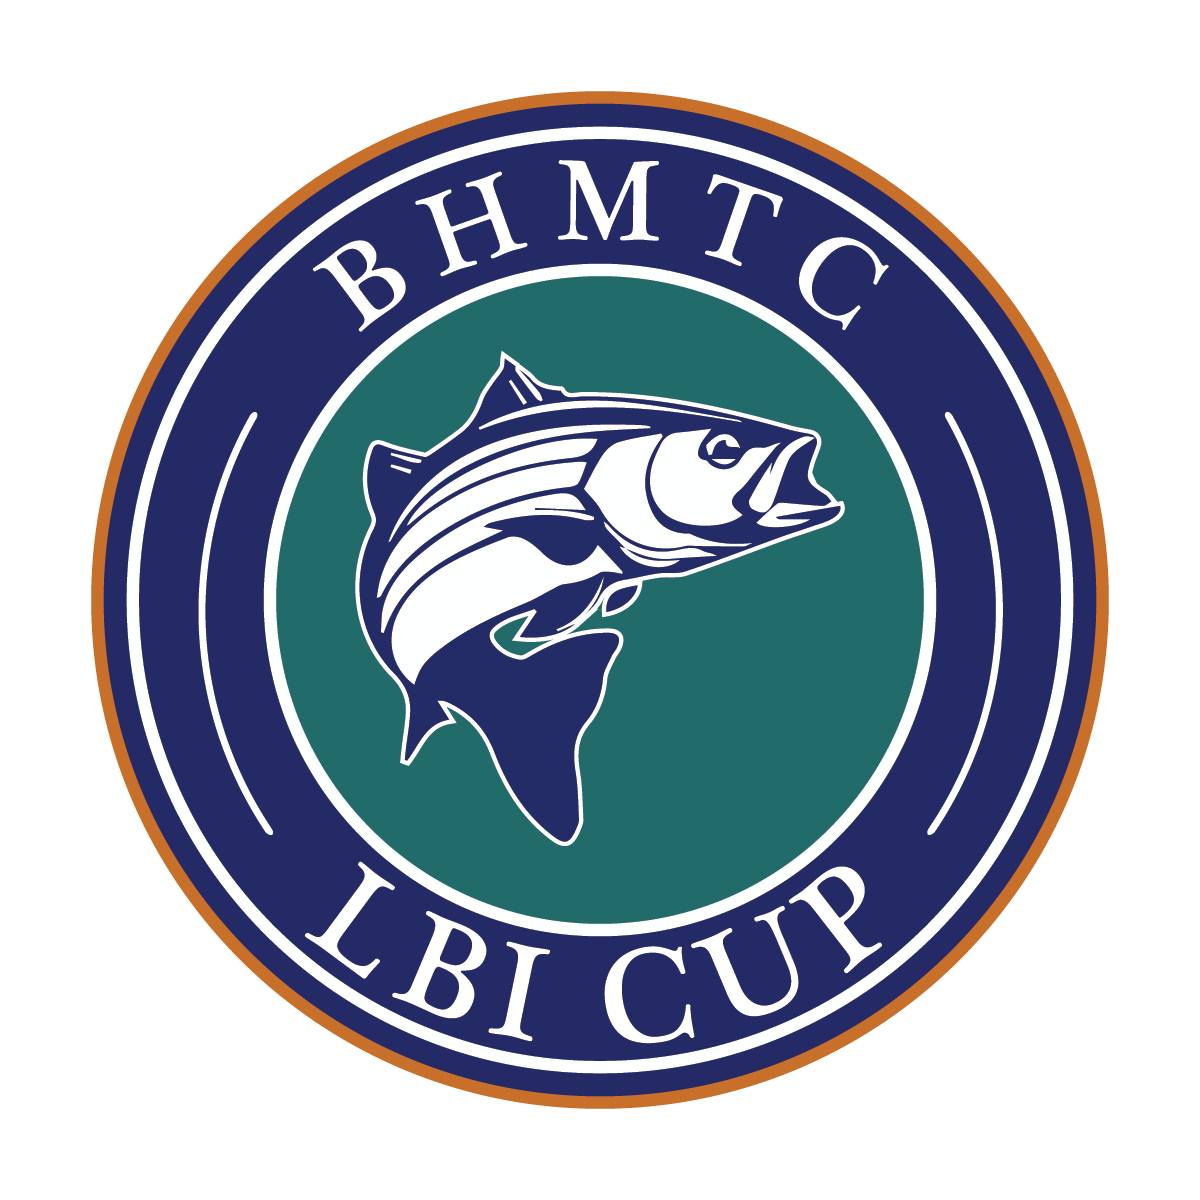 LBI_cup-logo-01.png